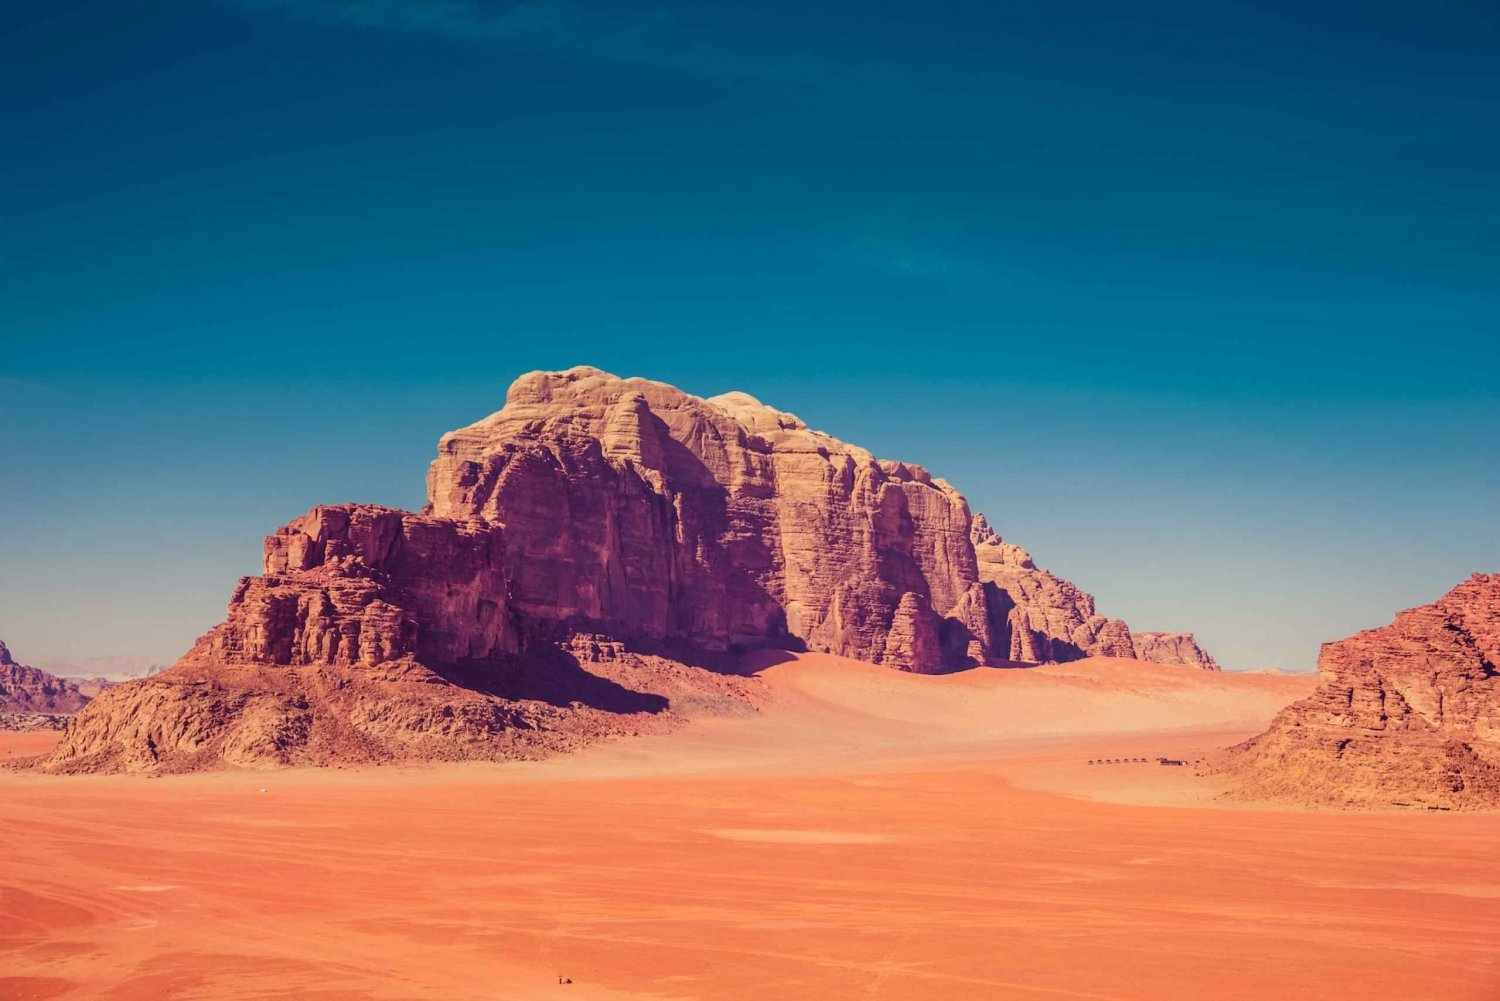 Tel Aviv: Petra & Wadi Rum 2-Day Glamping Trip with Flights